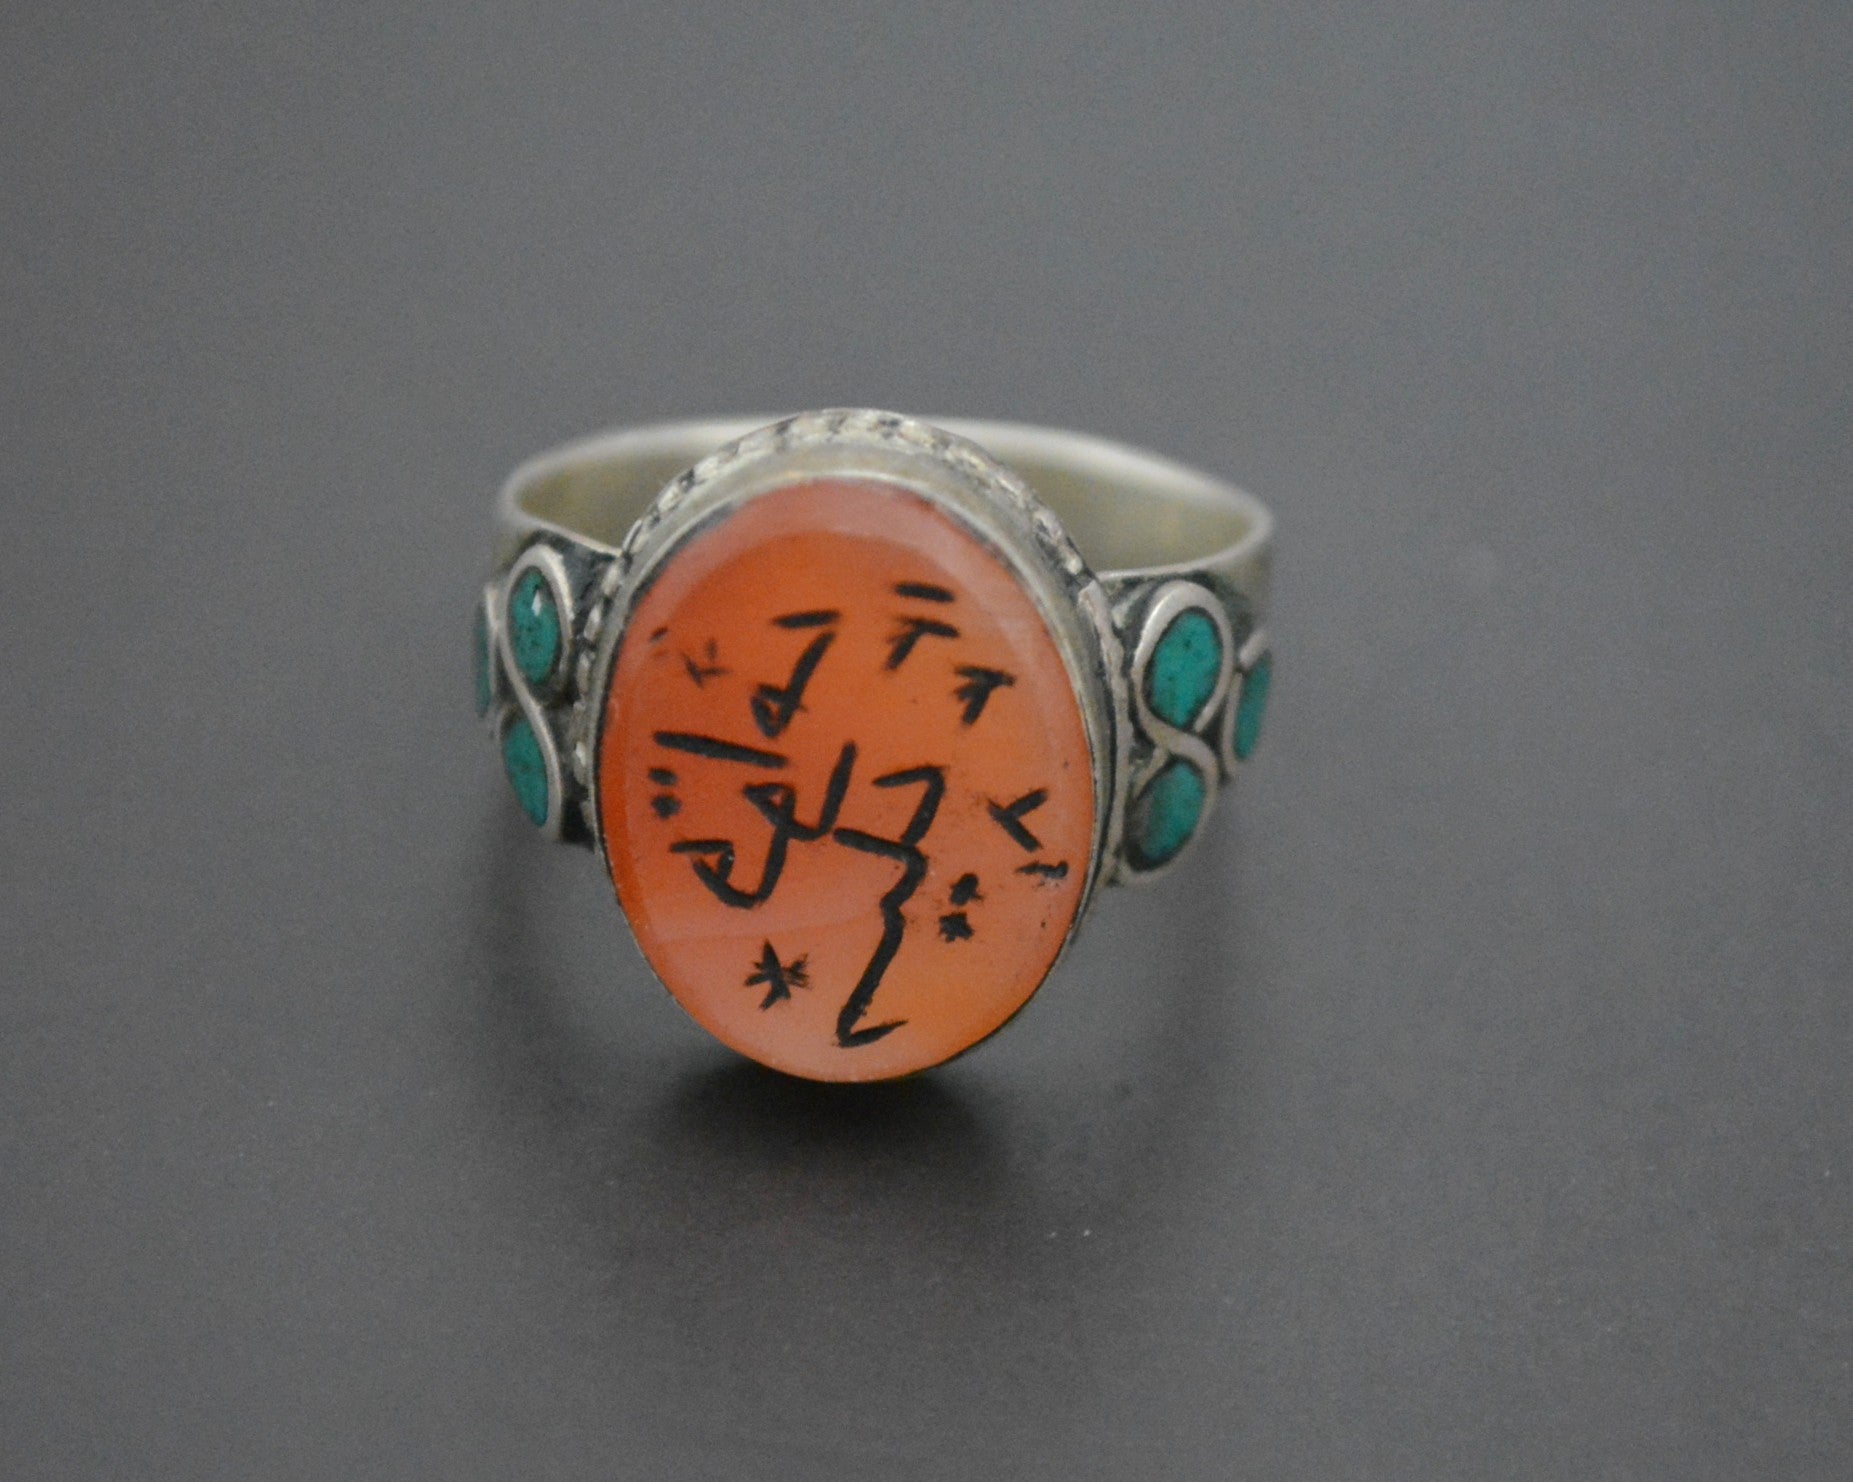 Afghani Arabic Writing Carnelian Ring - Size 10